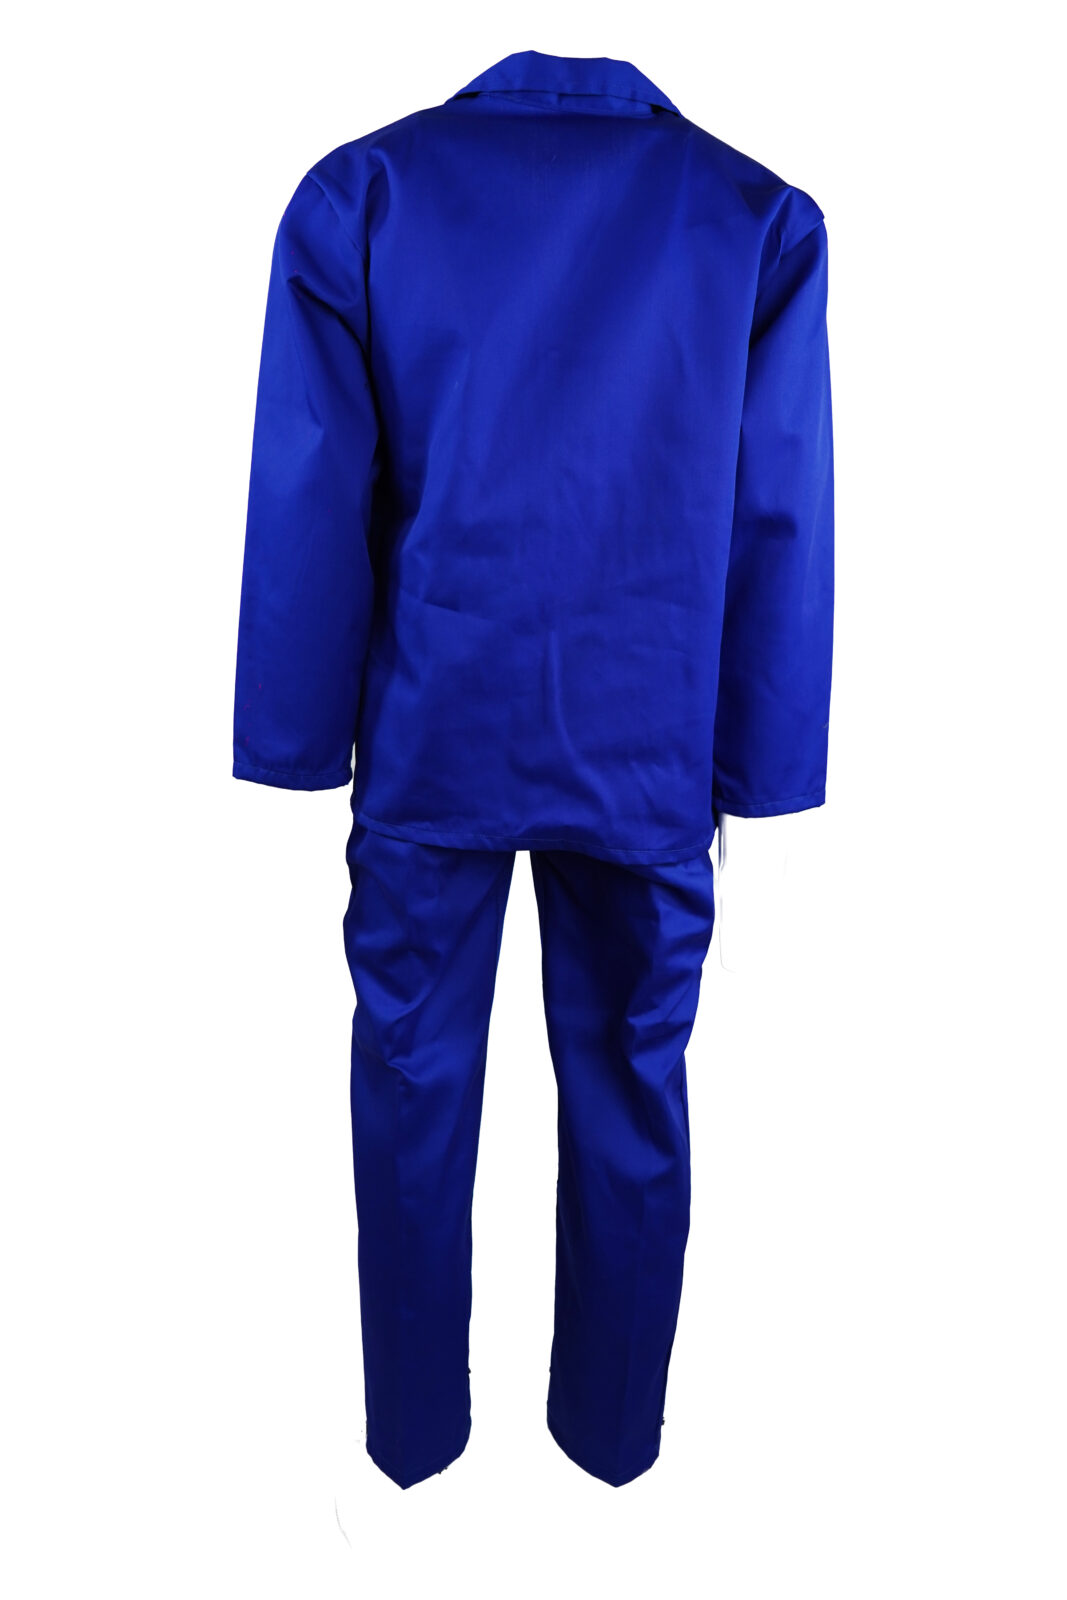 Santon Workwear Royal Blue Polycotton Conti Suit - Santon Workwear